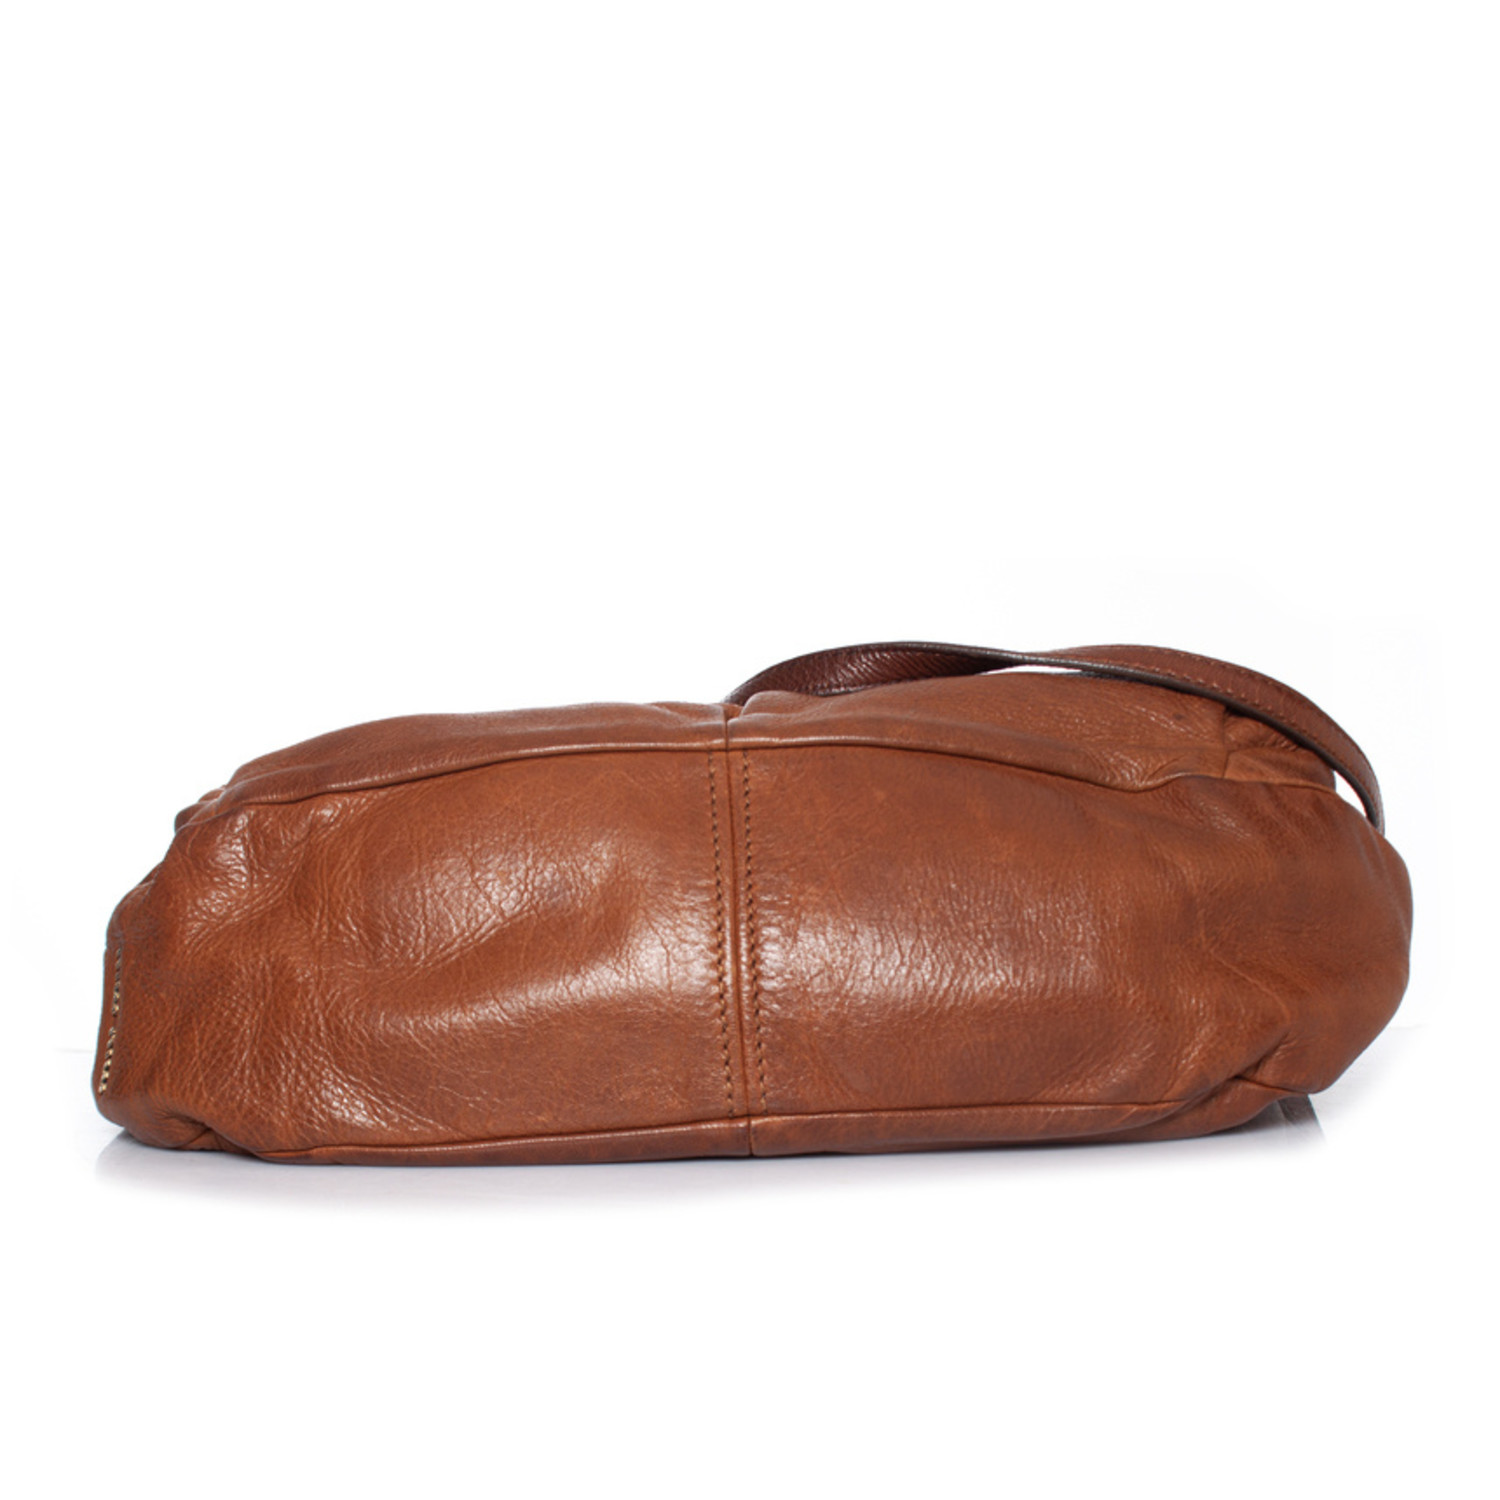 Miu Miu shoulder bag in brown grained leather